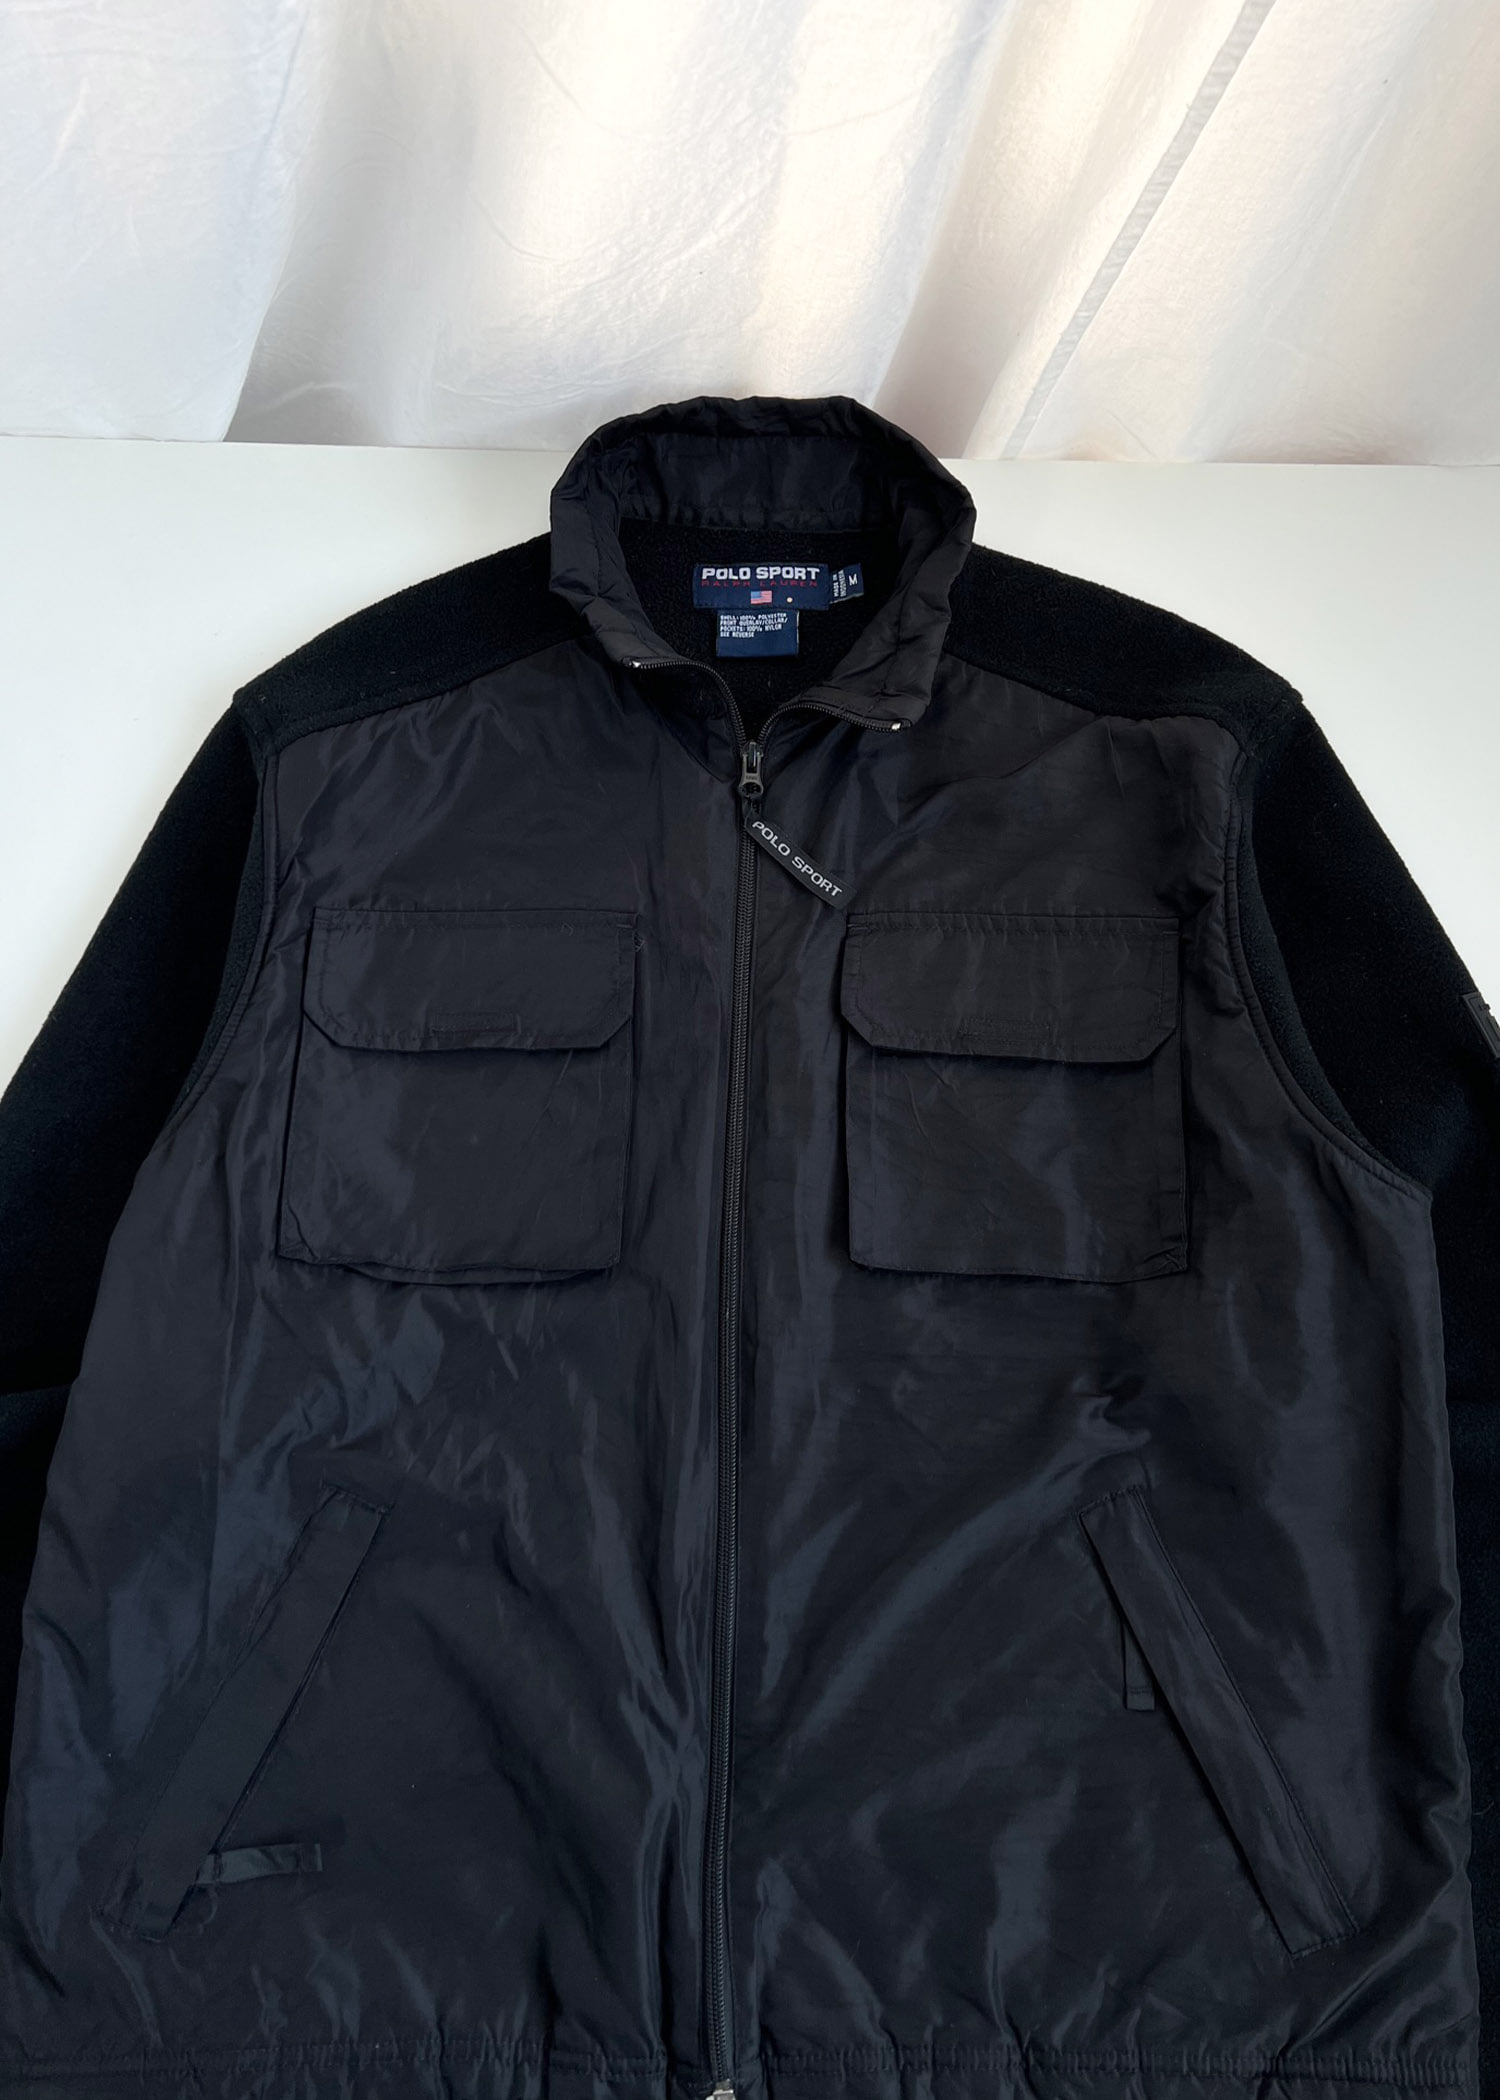 POLO SPORTS fleece&amp;nylon docking jacket